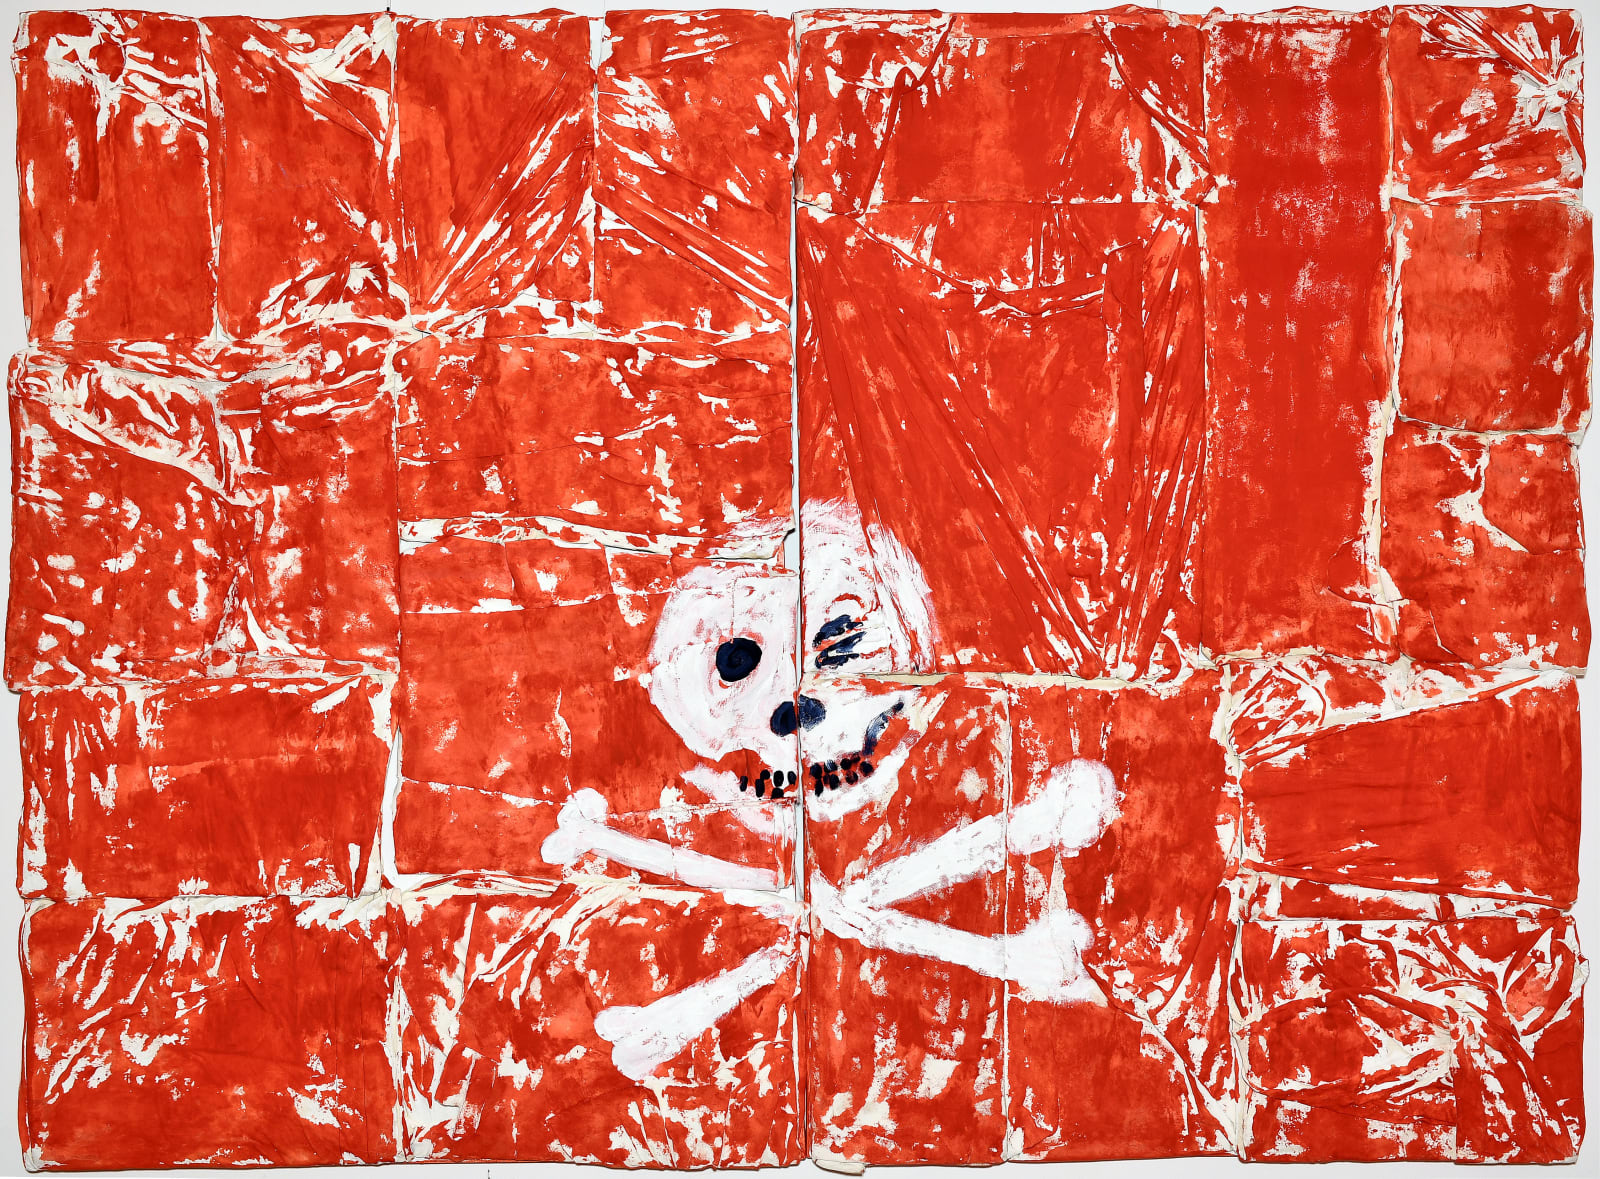 Mario Arlati, Incomplete Flag Jolly Roger no Prisoner, 2017